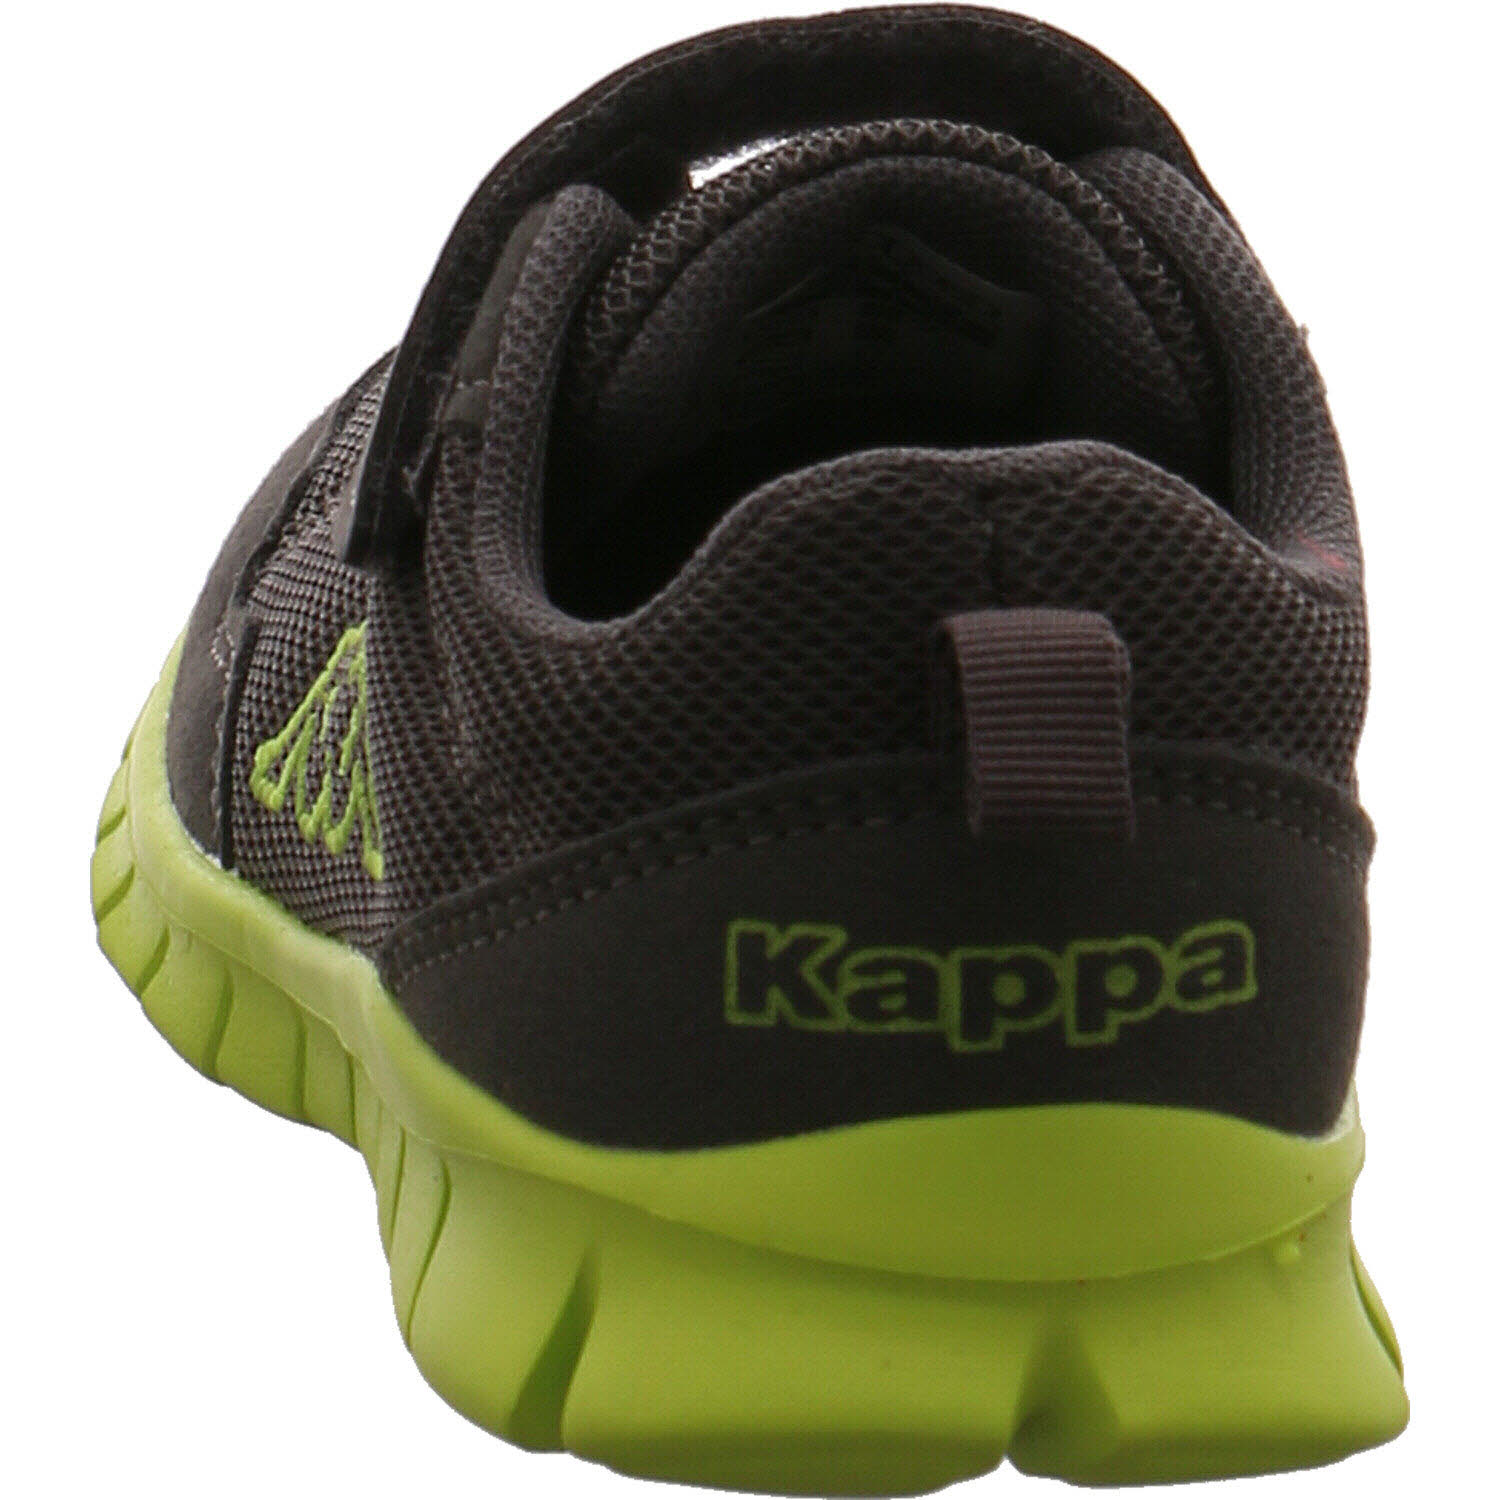 Kappa Sneaker low Stylecode: 260982BCK Valdis BC K